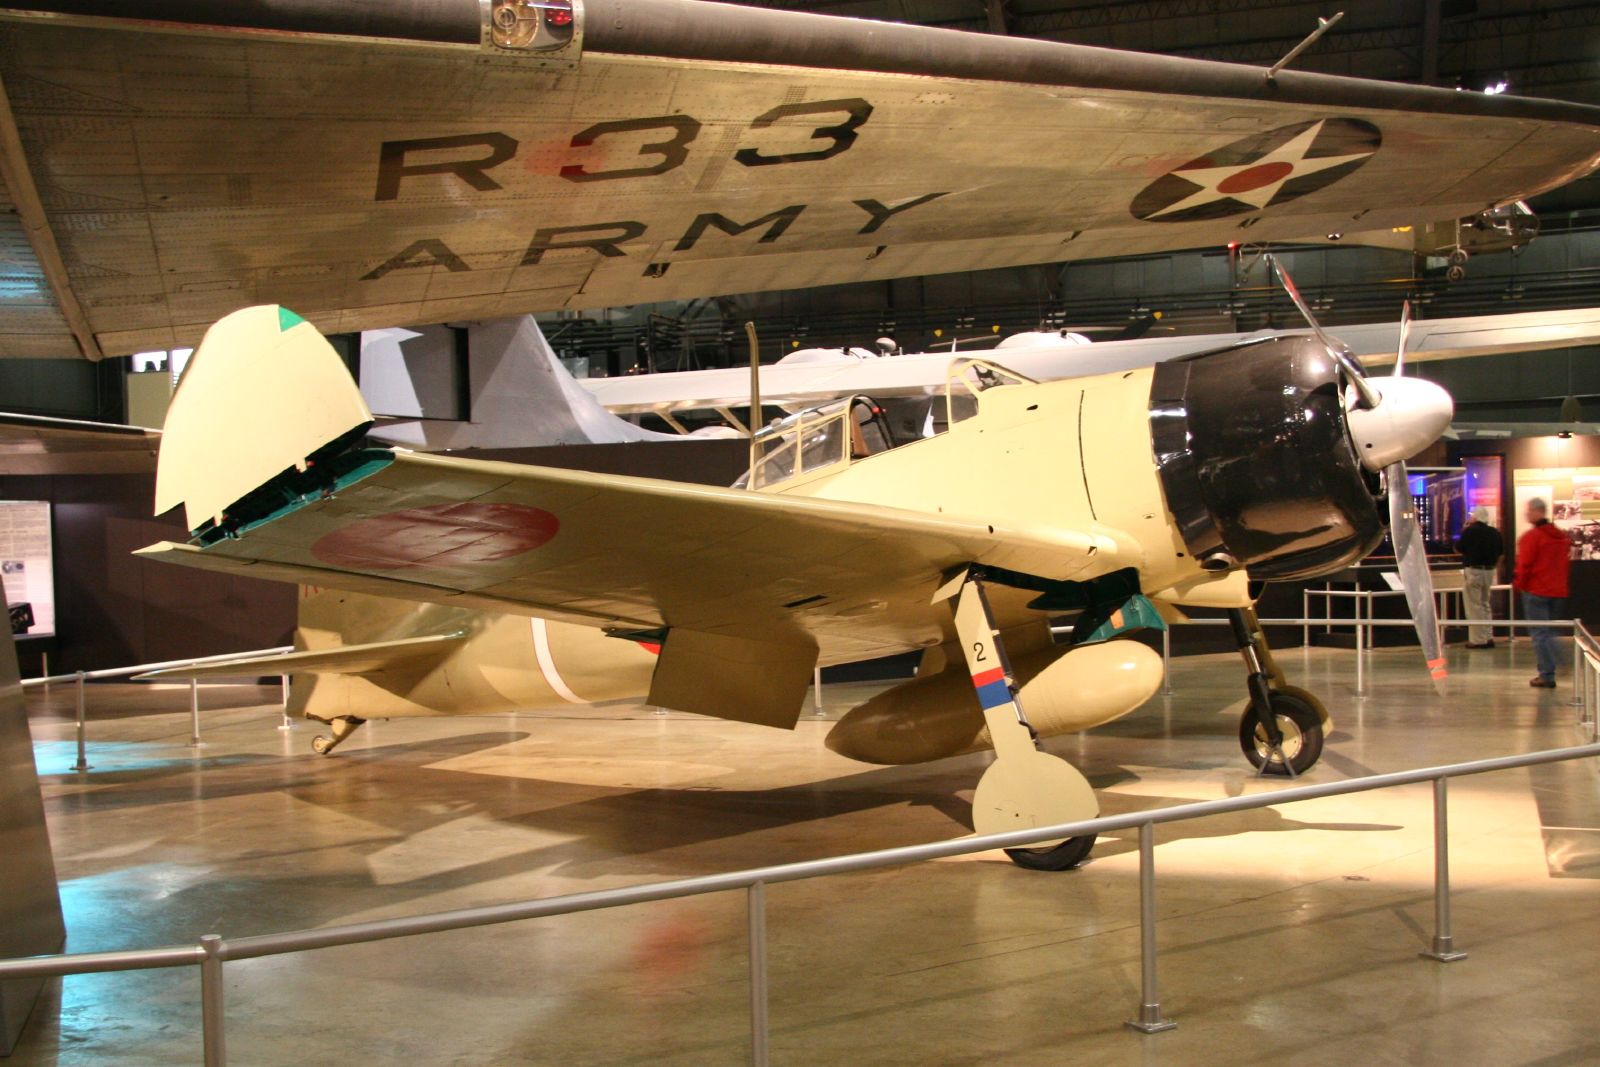 antique war planes displayed on display at museum